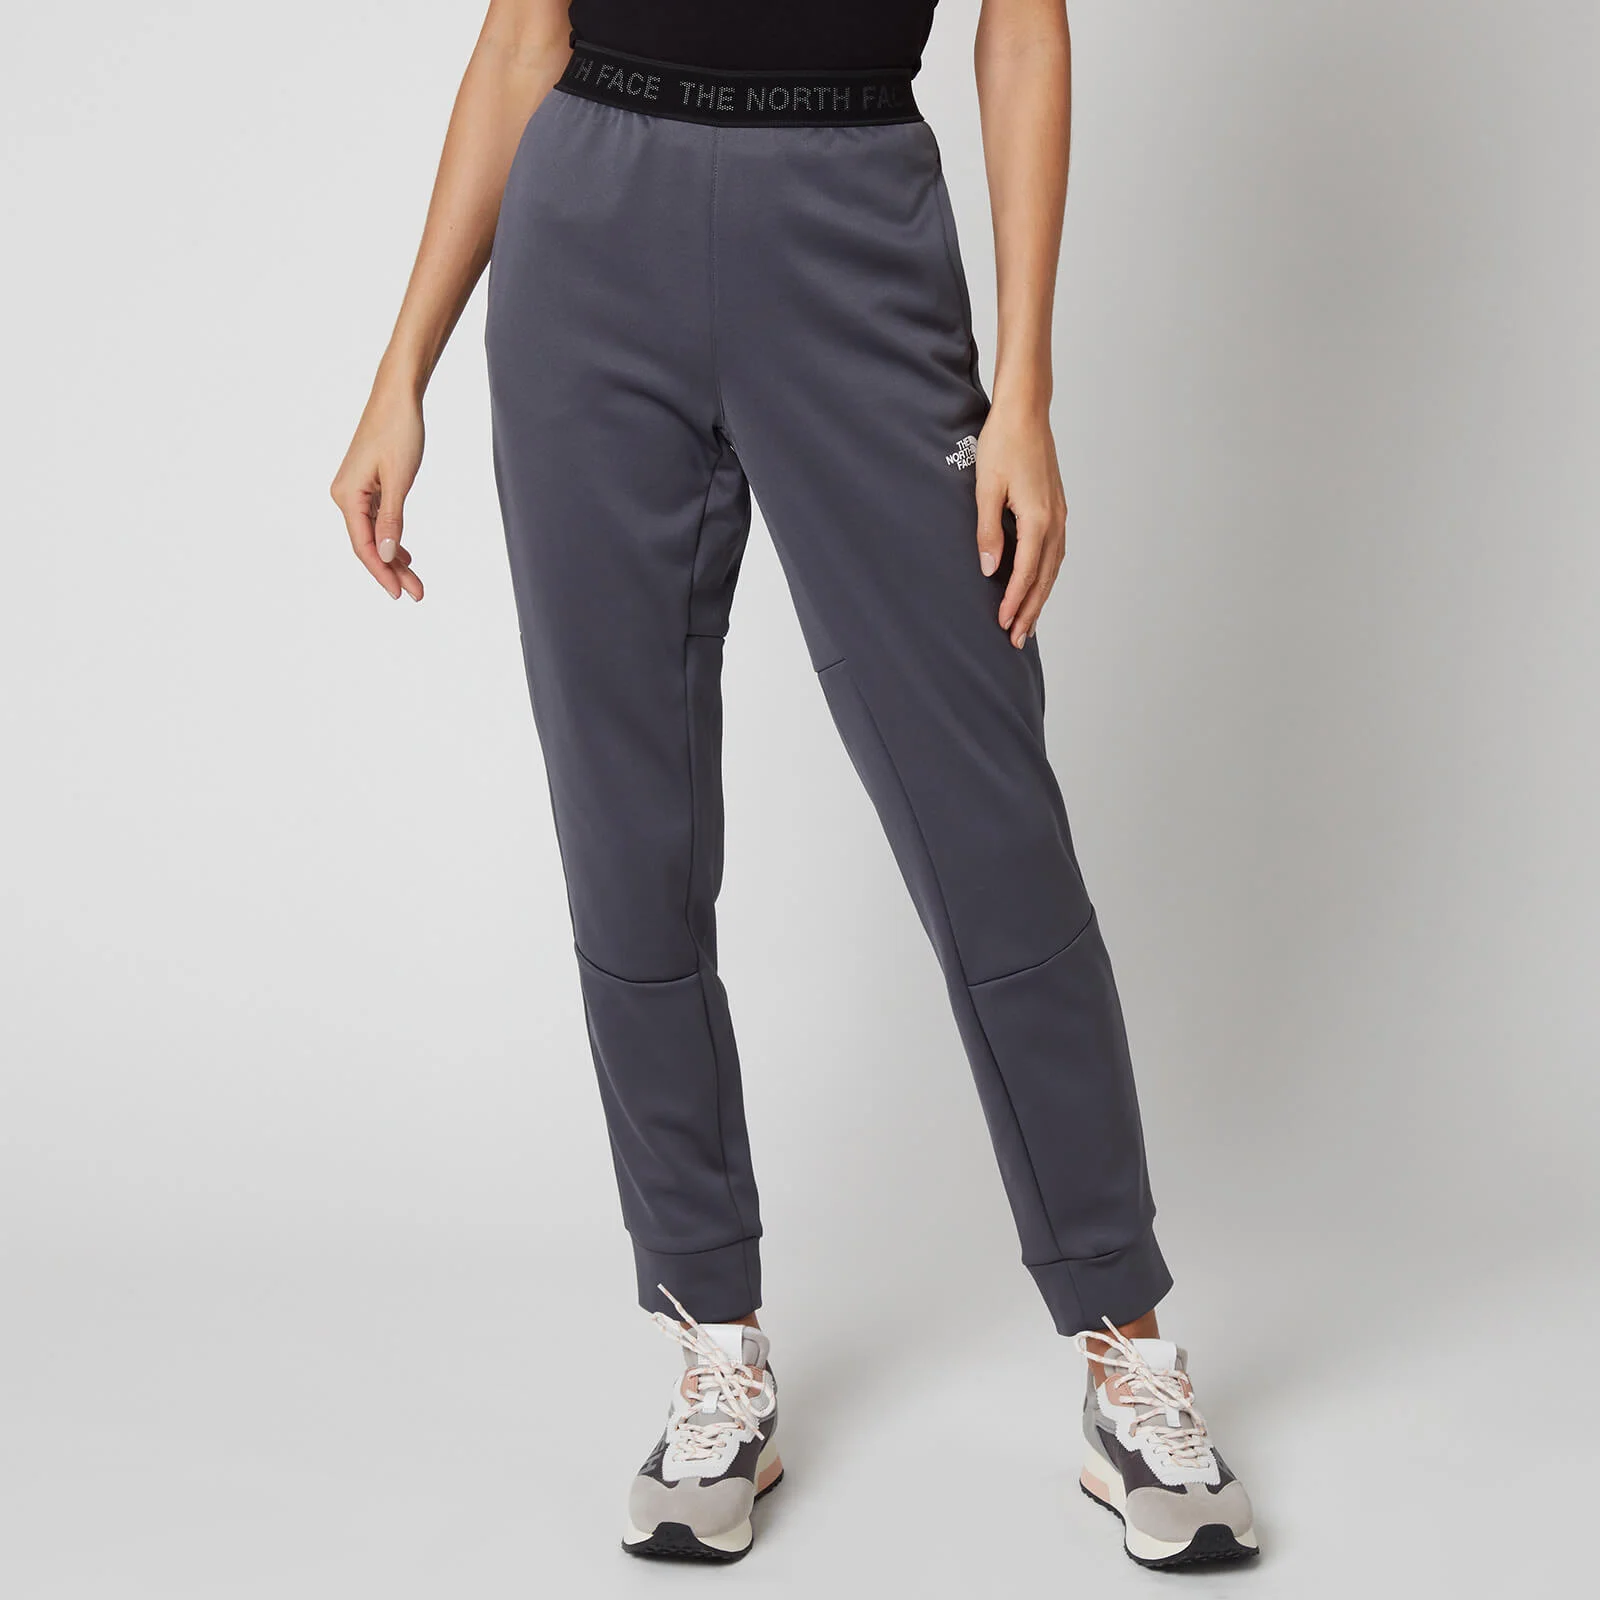 The North Face Women's Tnl Pants - Vanadis Grey Image 1